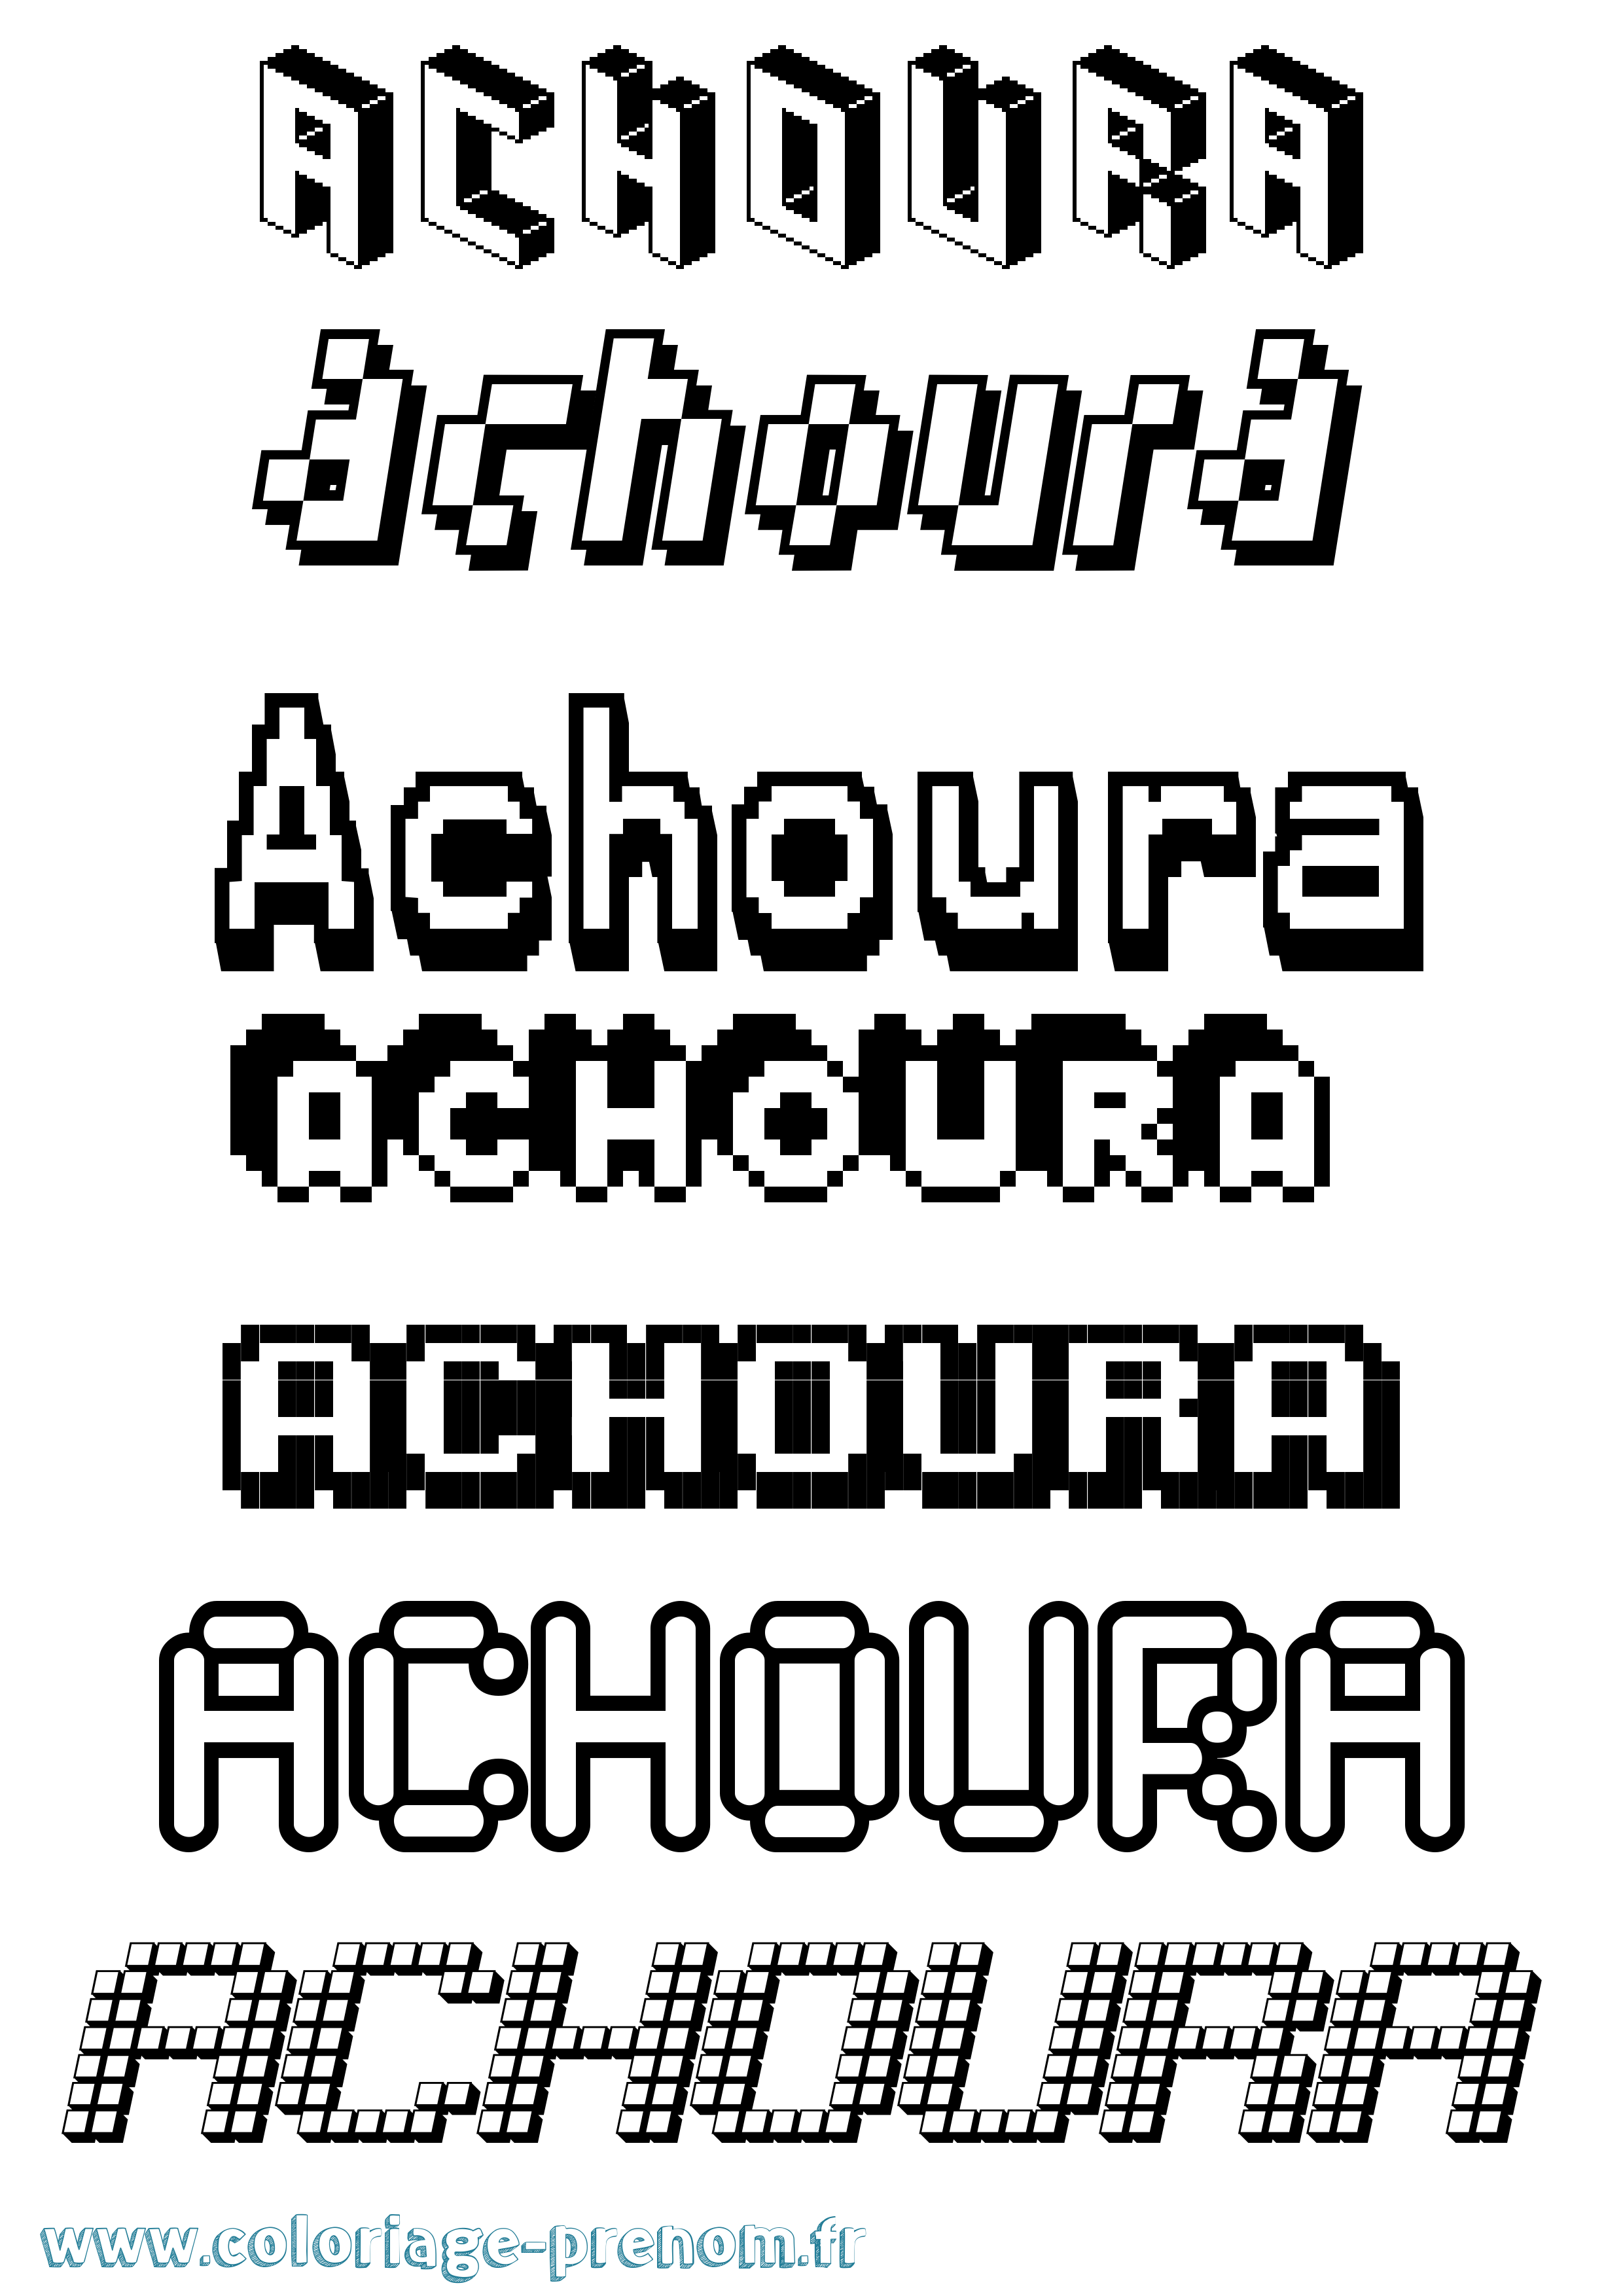 Coloriage prénom Achoura Pixel